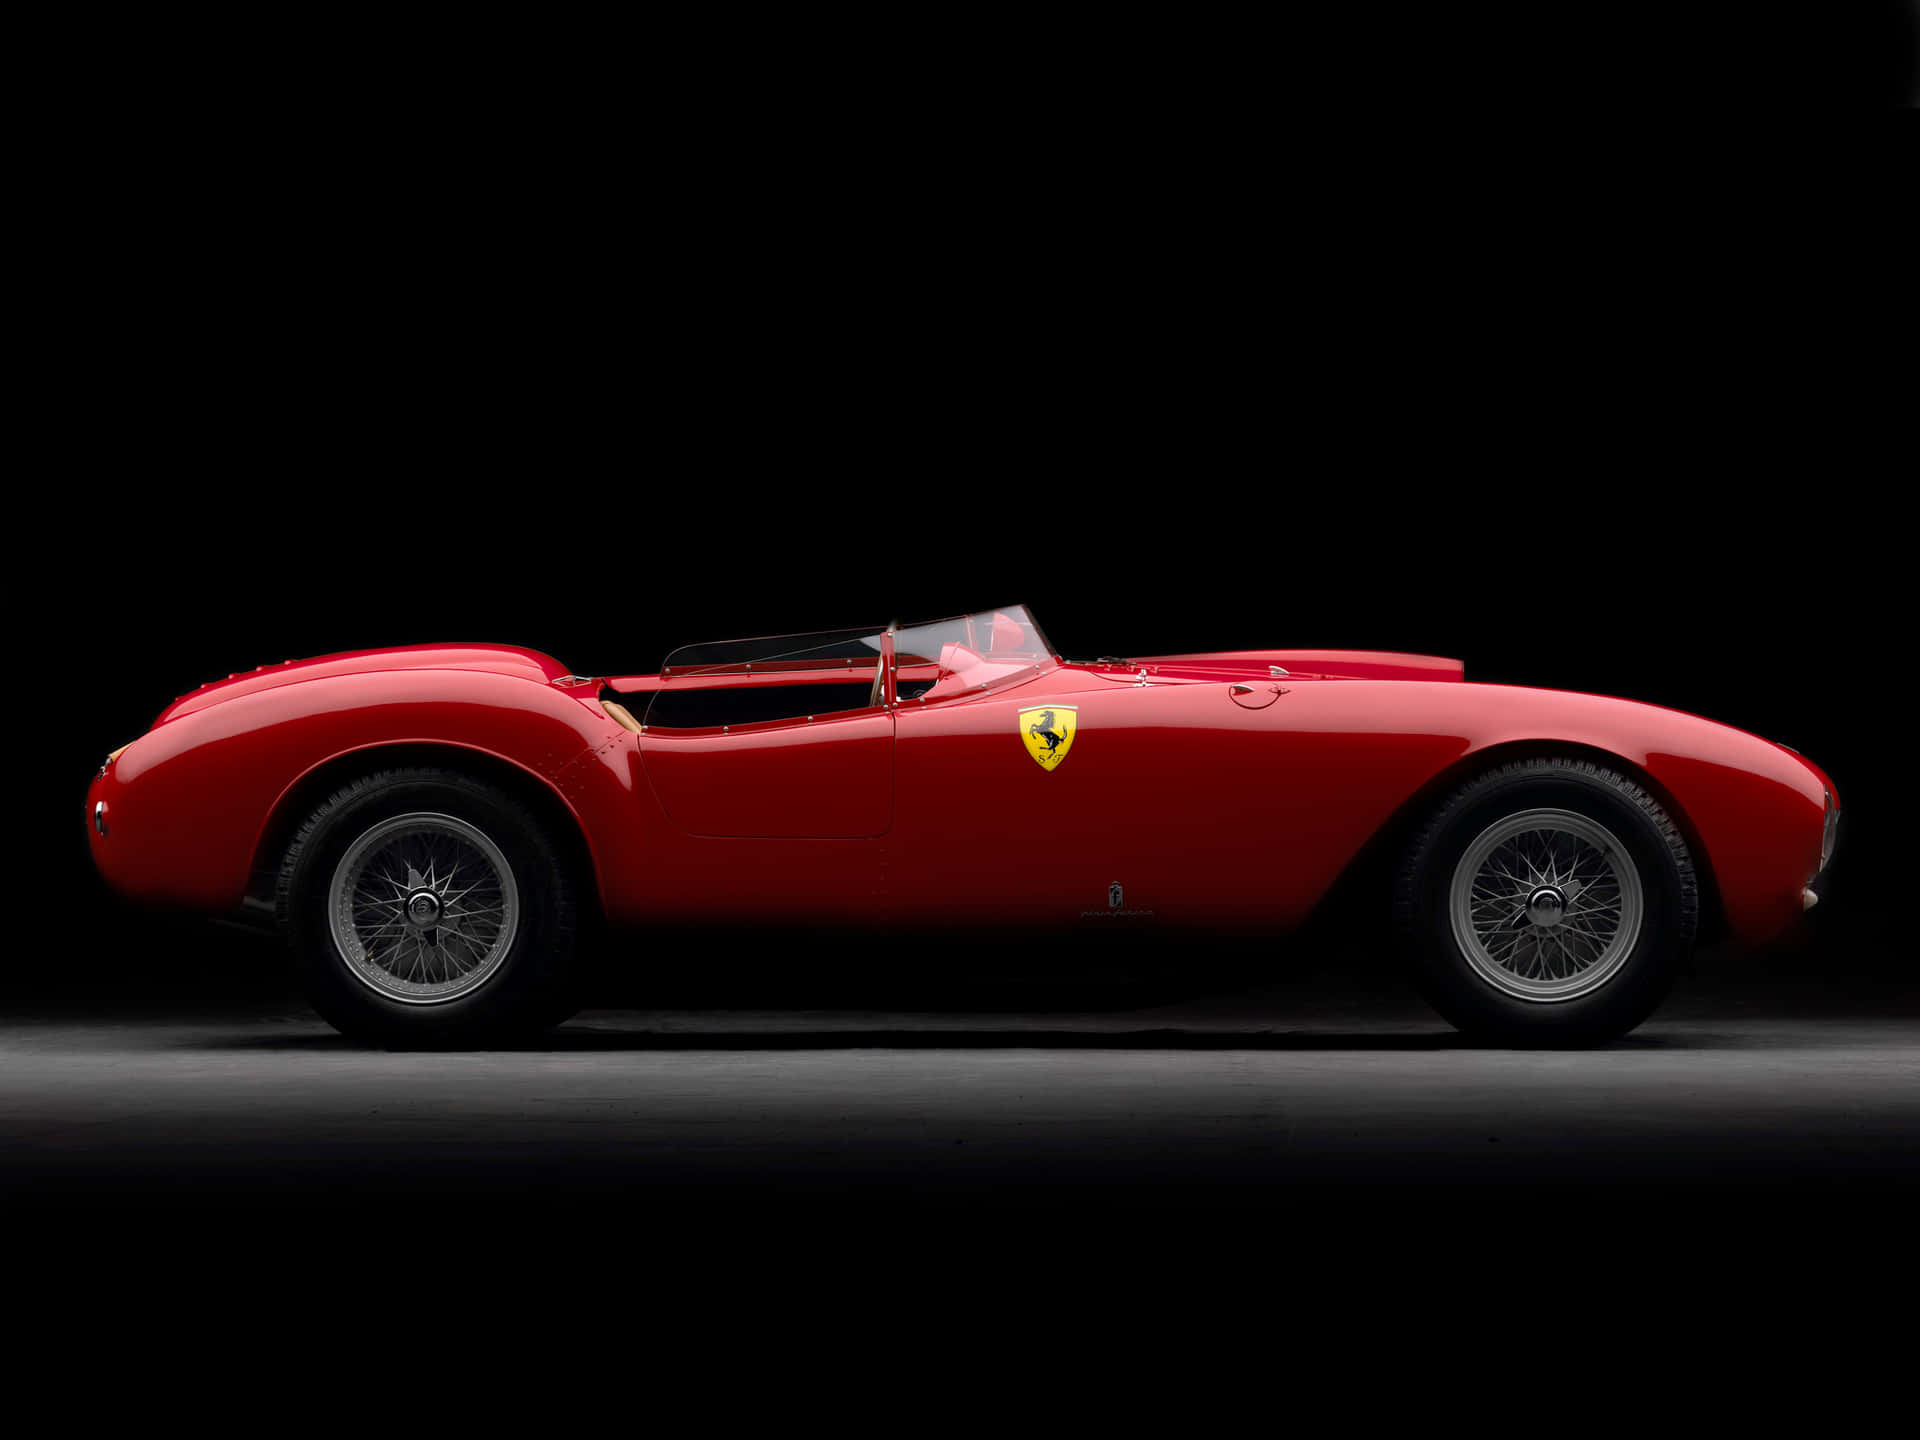 Enklassisk Ferrari Kör Genom En Europeisk Landsbygd. Wallpaper